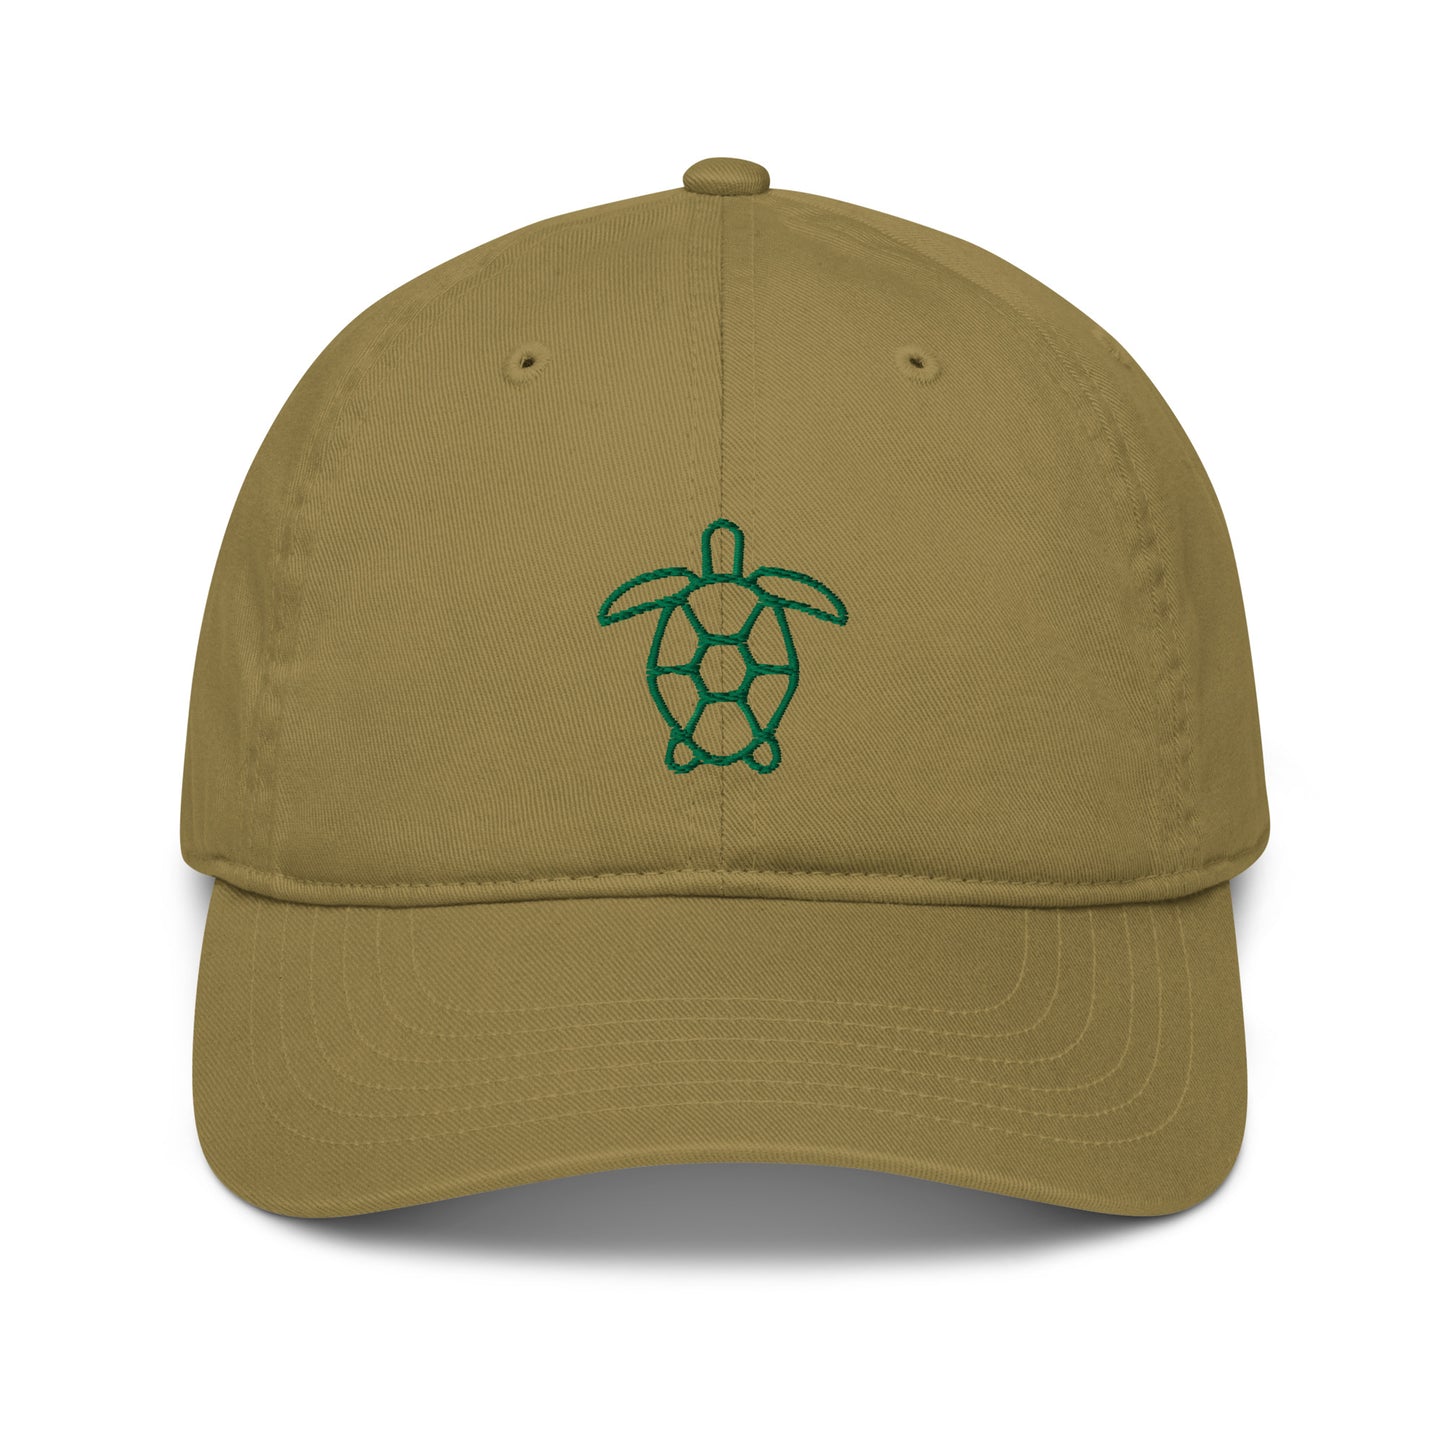 Shell Baby Organic Peak hat (Green)